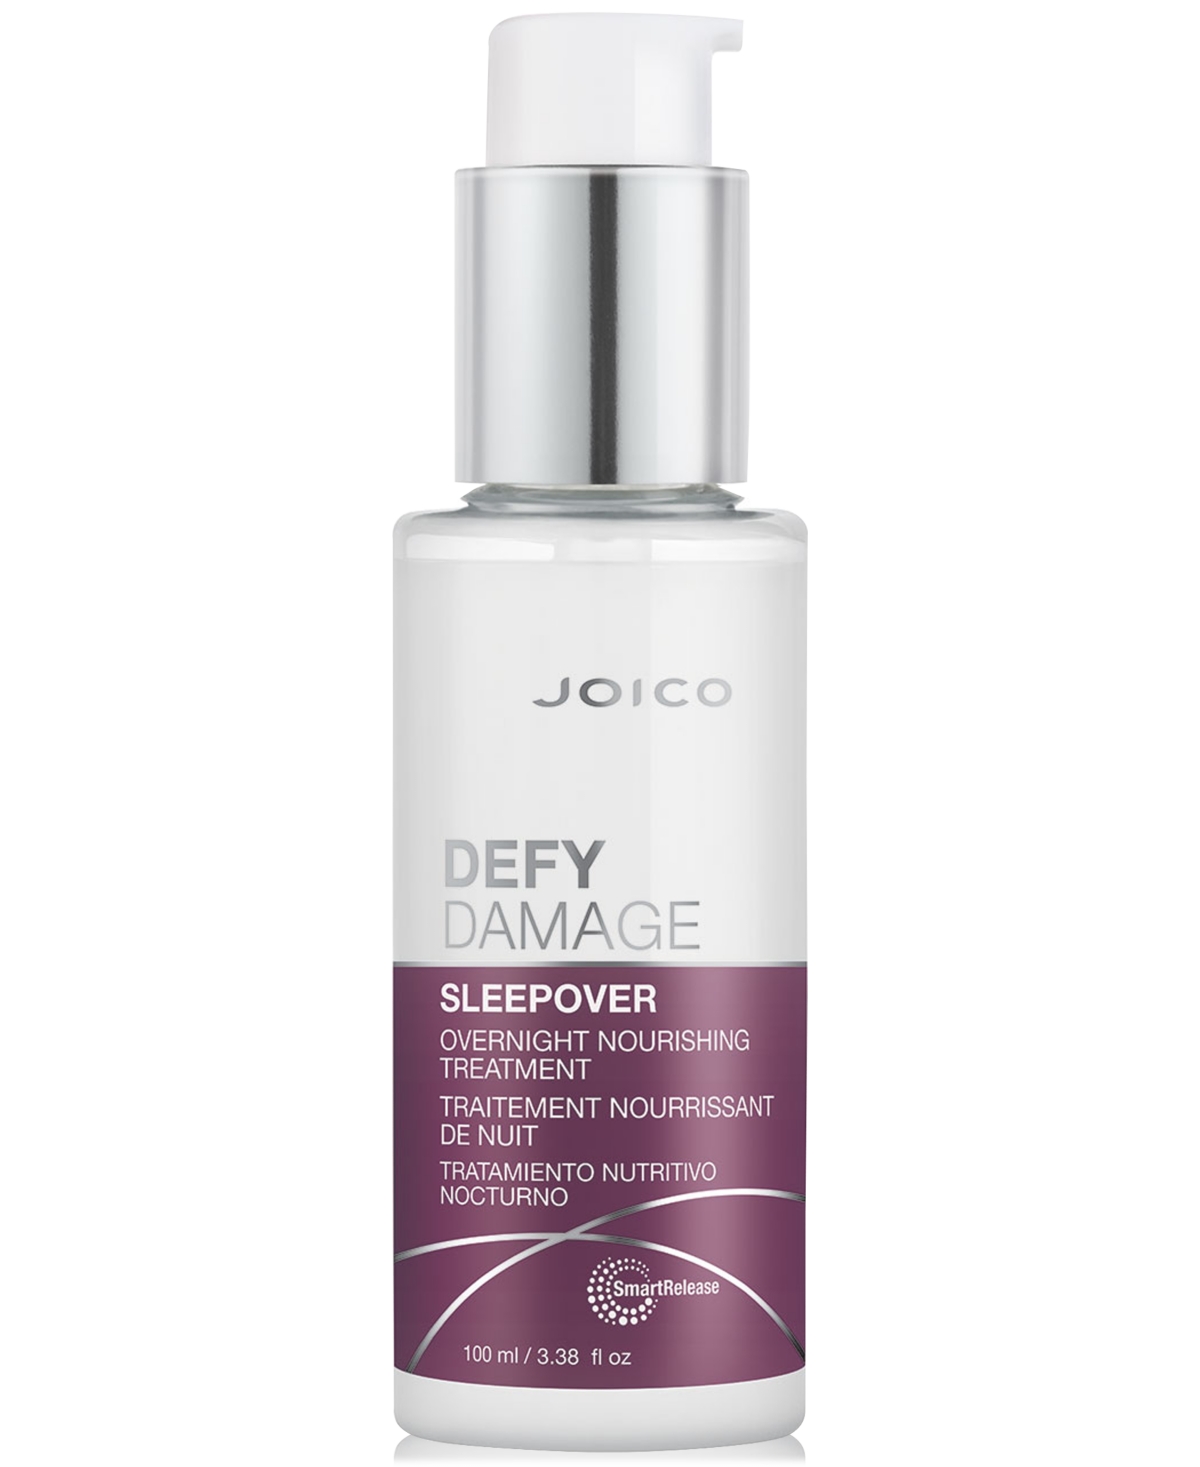 Joico Defy Damage Sleepover Overnight Nourishing Treatment, 3.38 Oz, From Purebeauty Salon & Spa